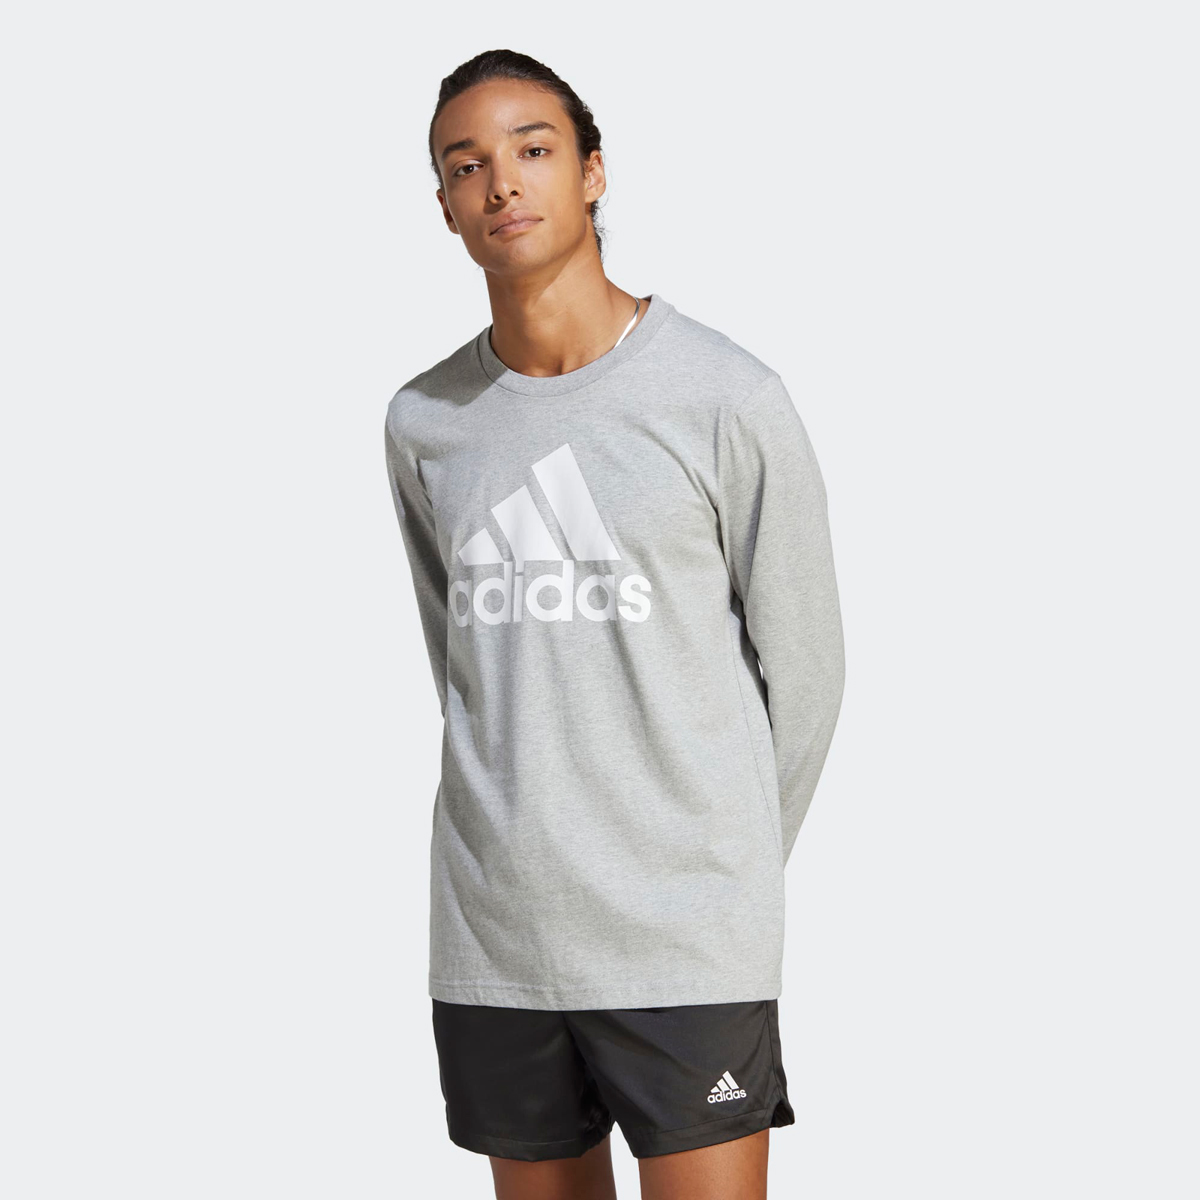 adidas-Essentials-Big-Logo-Long-Sleeve-Tee-Shirt-Medium-Grey